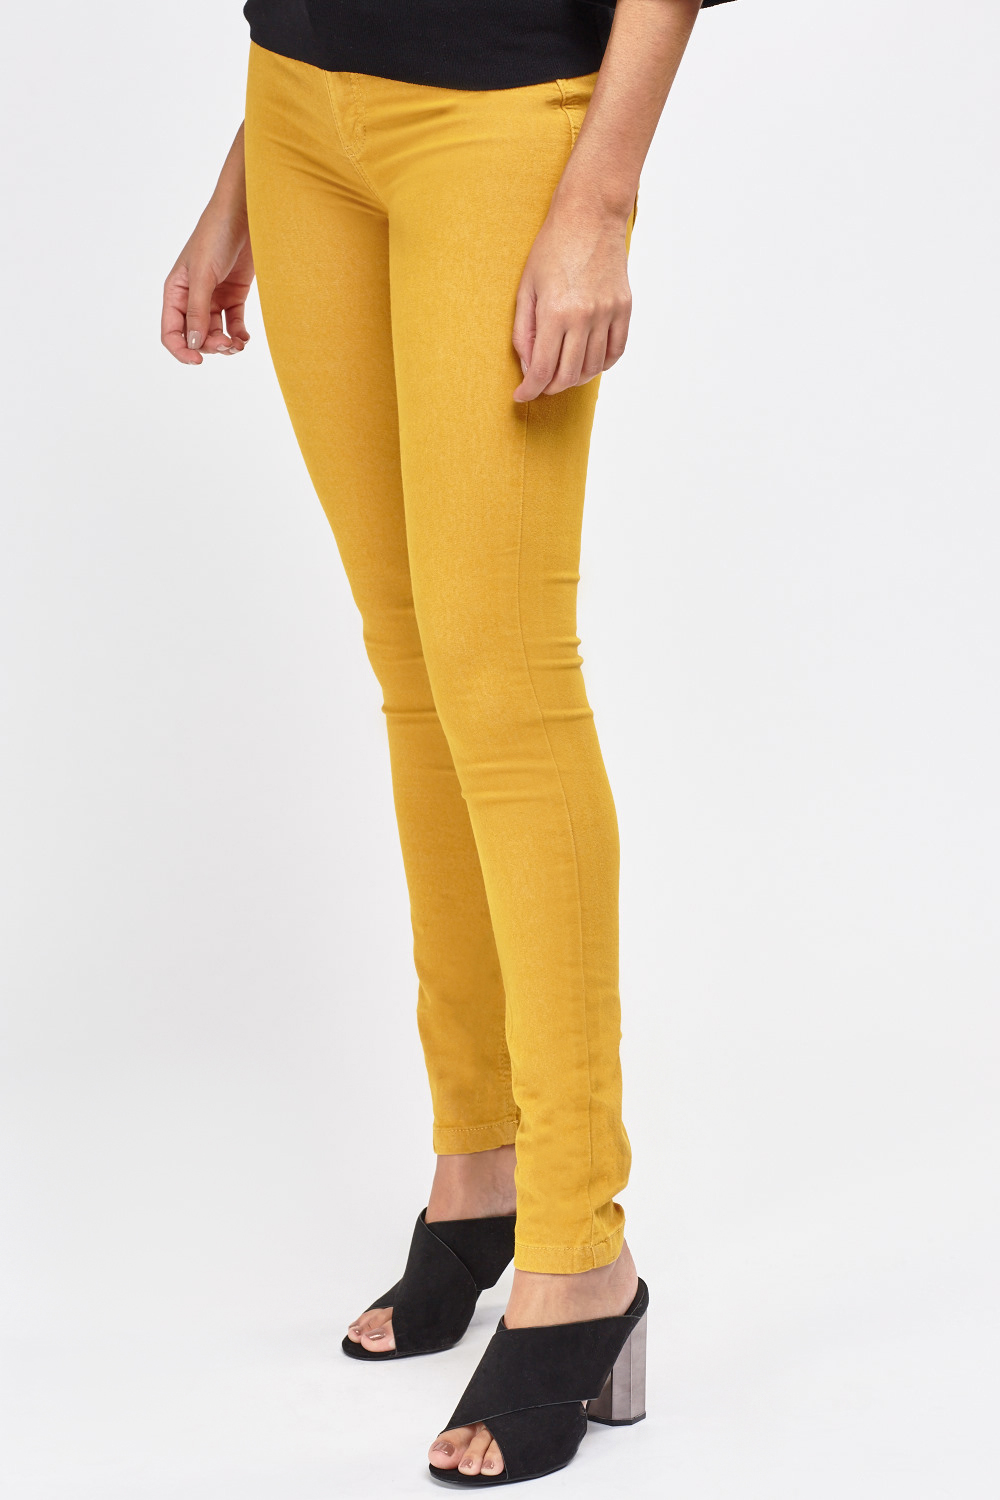 Mustard Skinny Jeans - Just $3